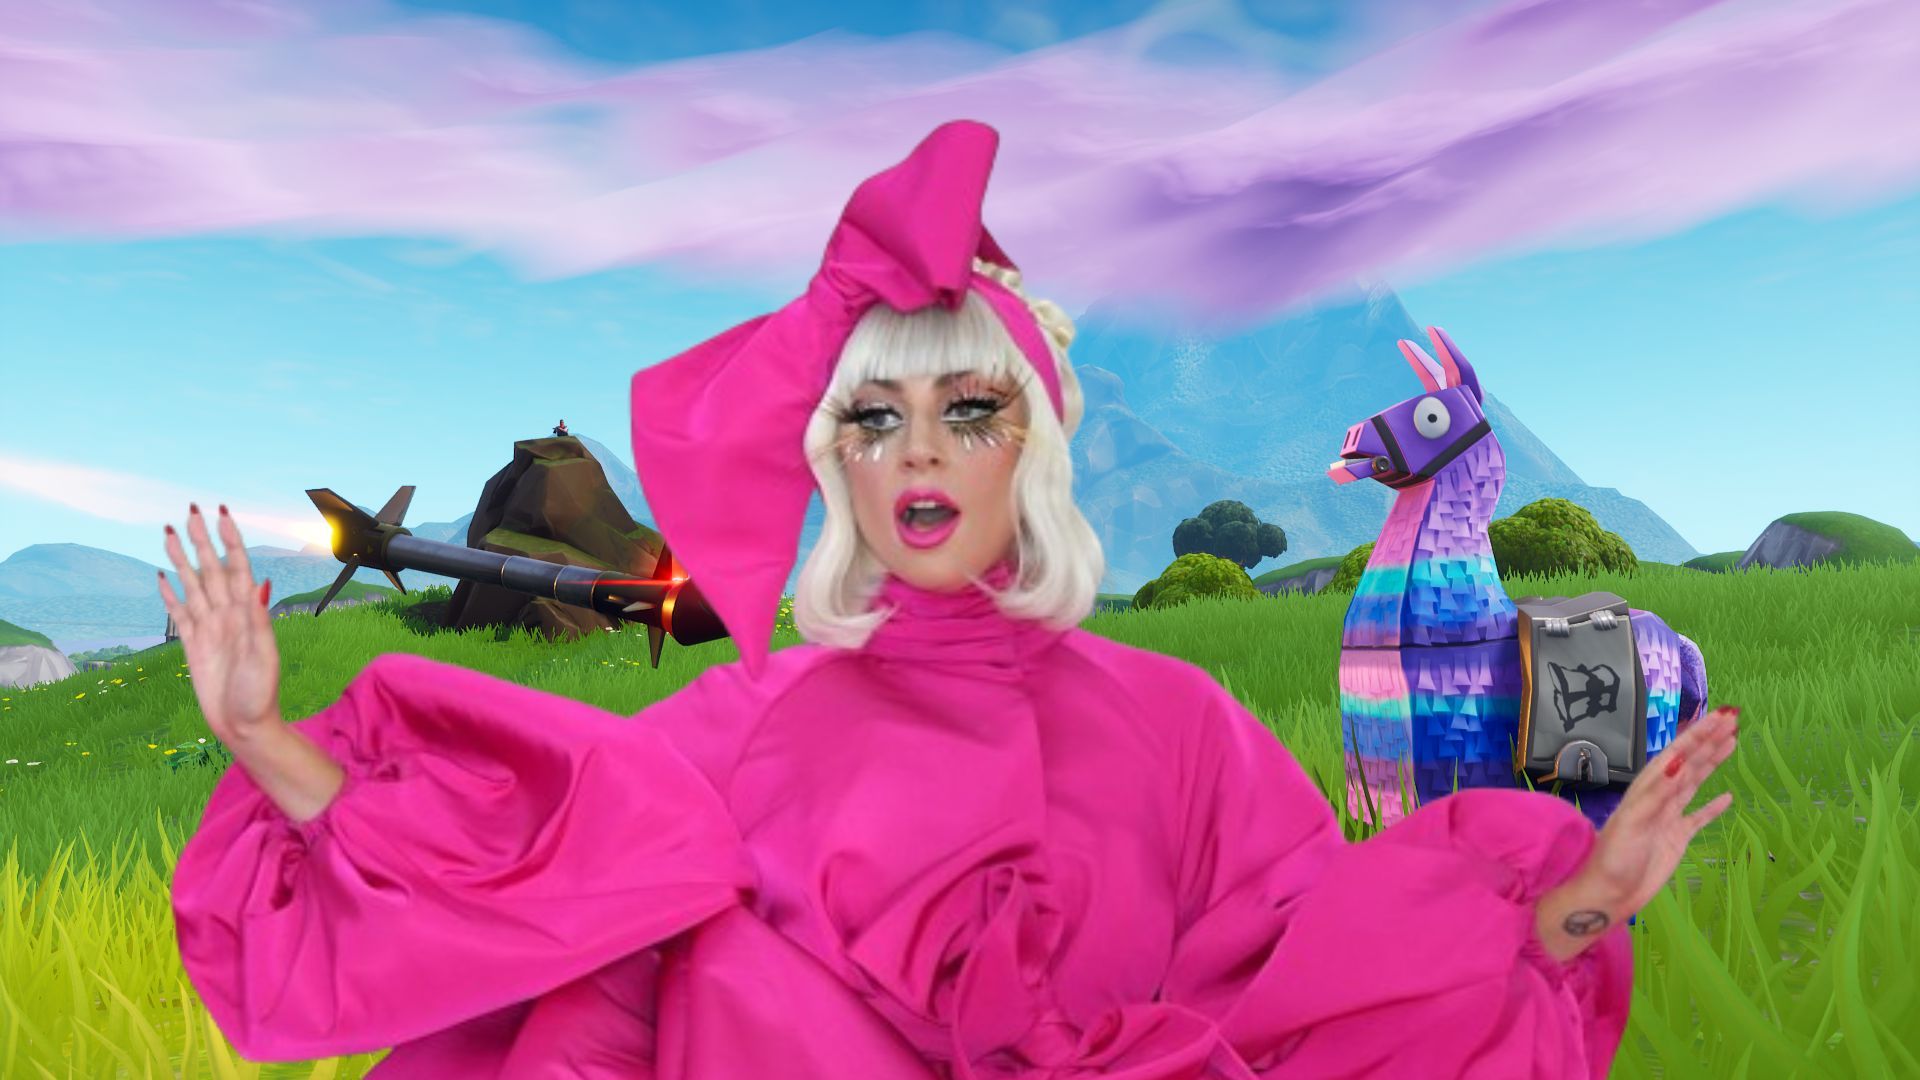 Fortnite is adding Lady Gaga as their next big artist collaboration